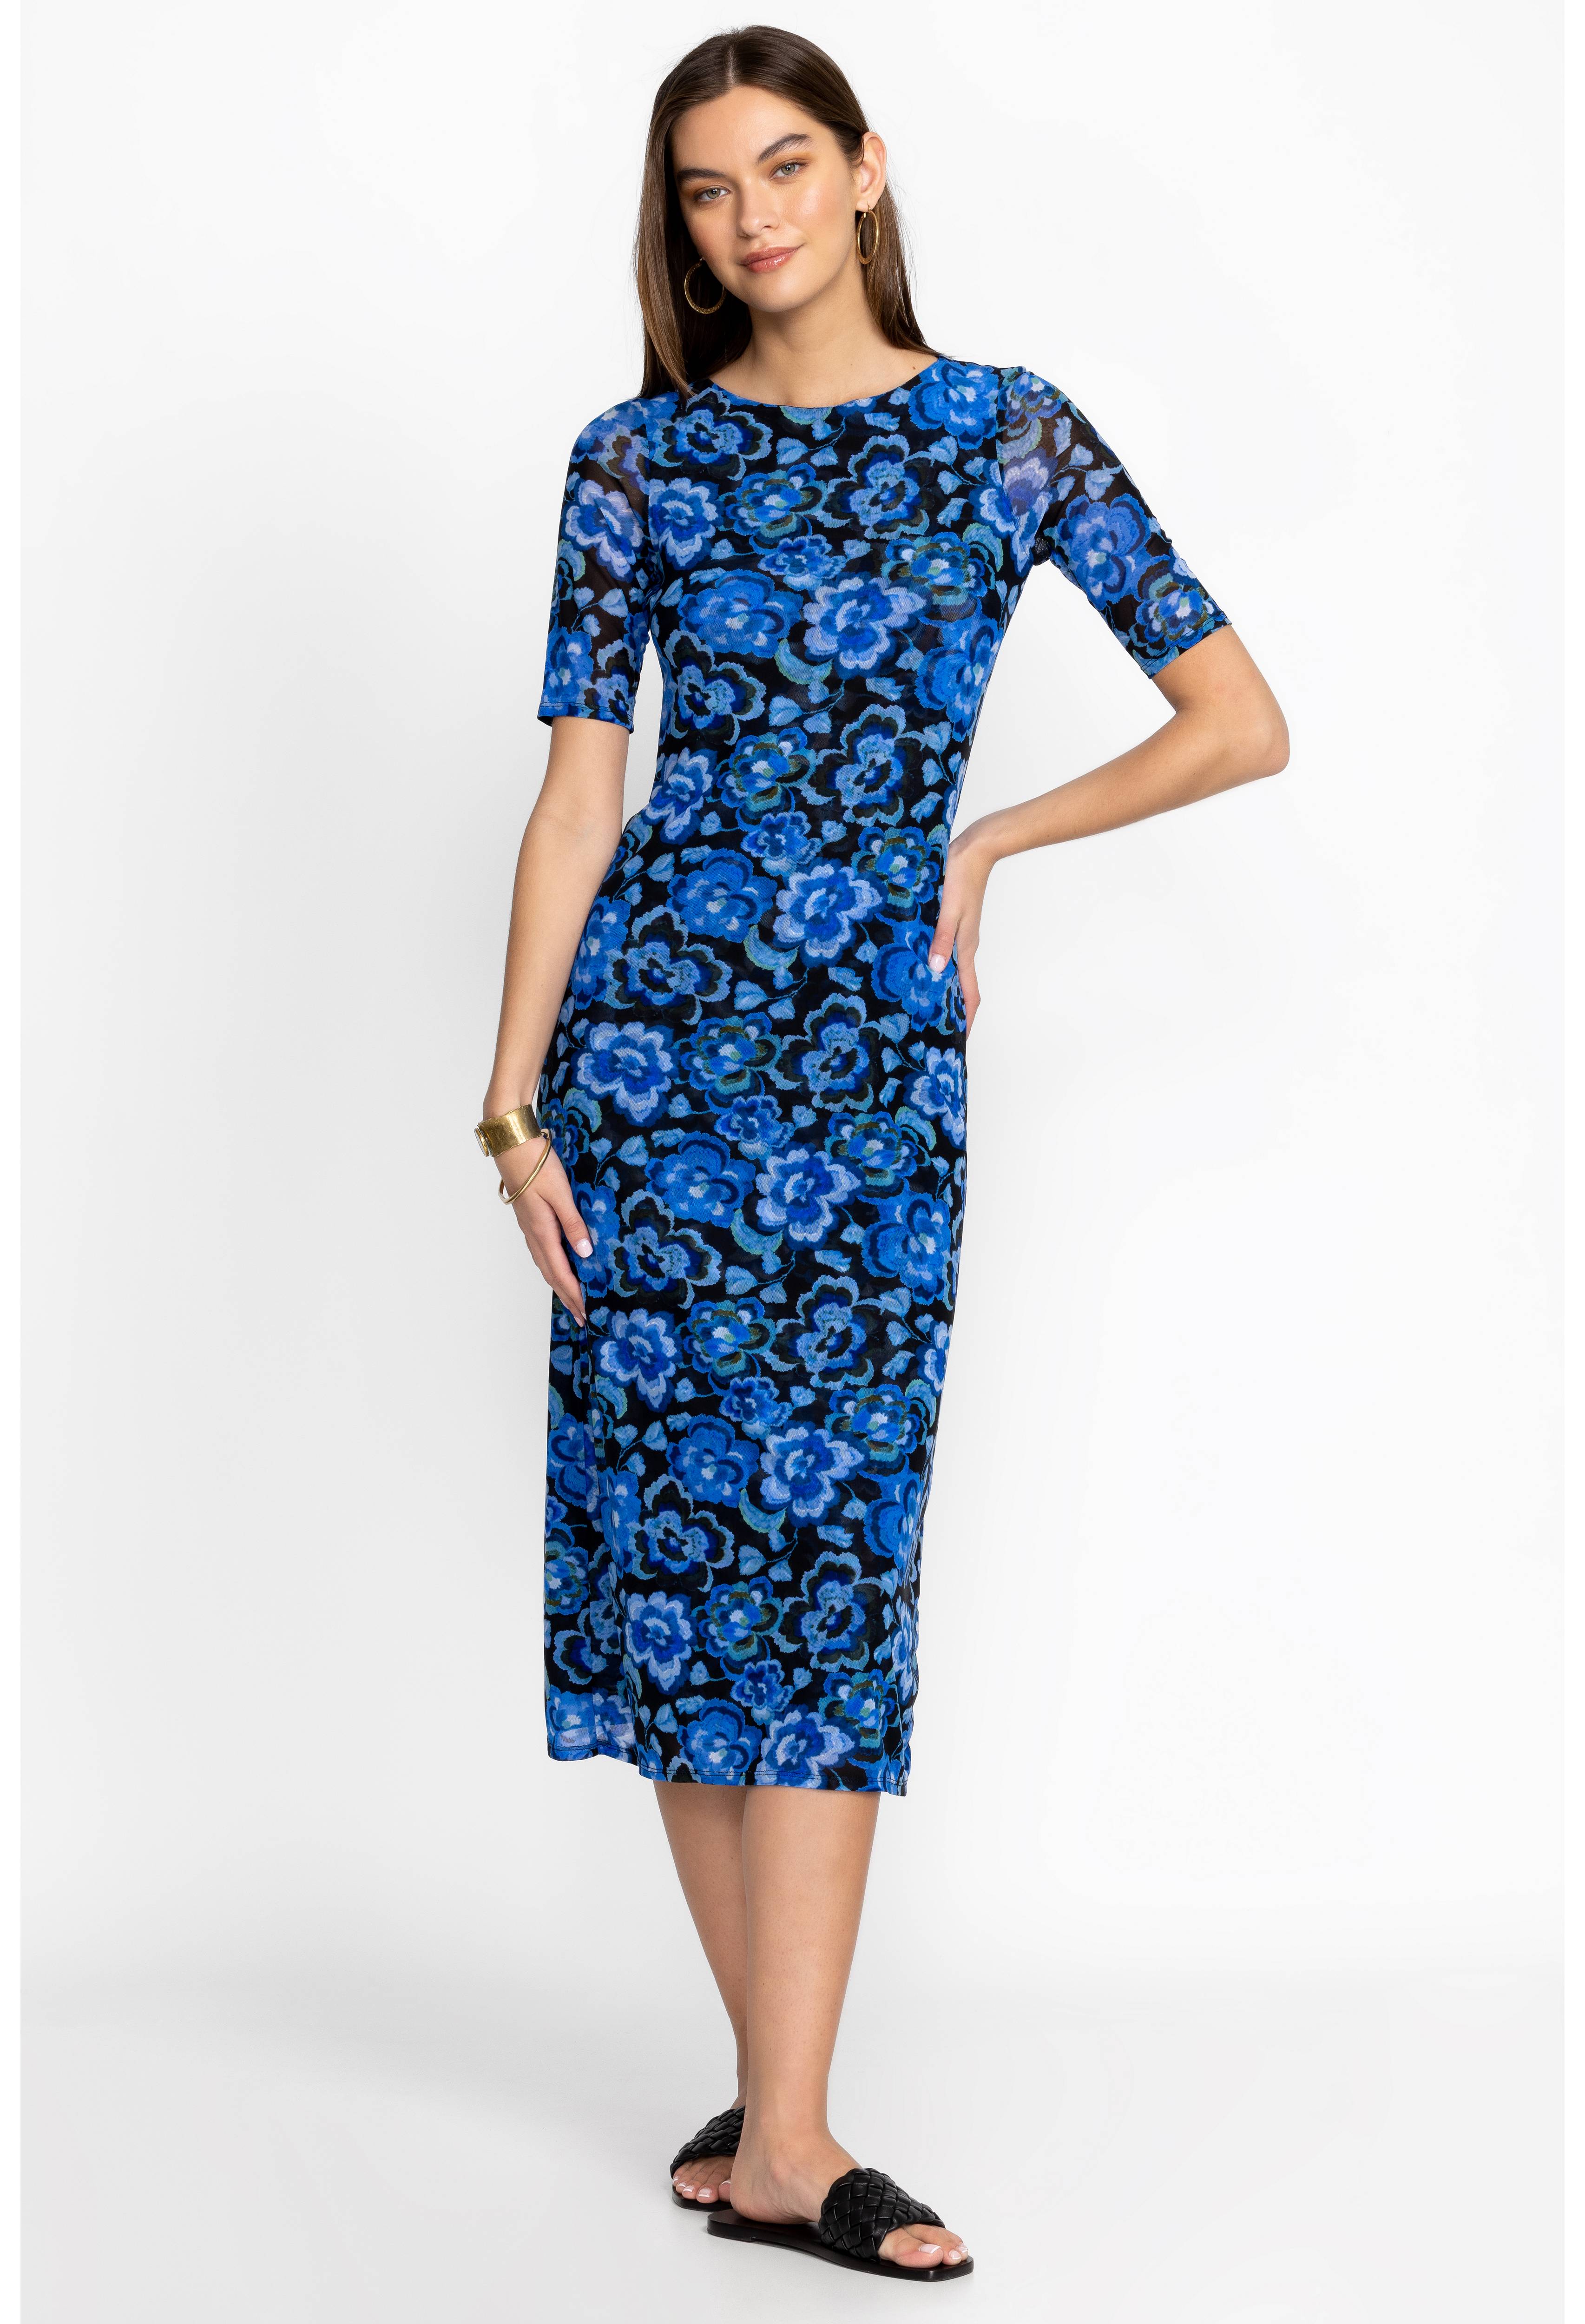 Blue Calanthe Mesh Midi Dress, , large image number 3